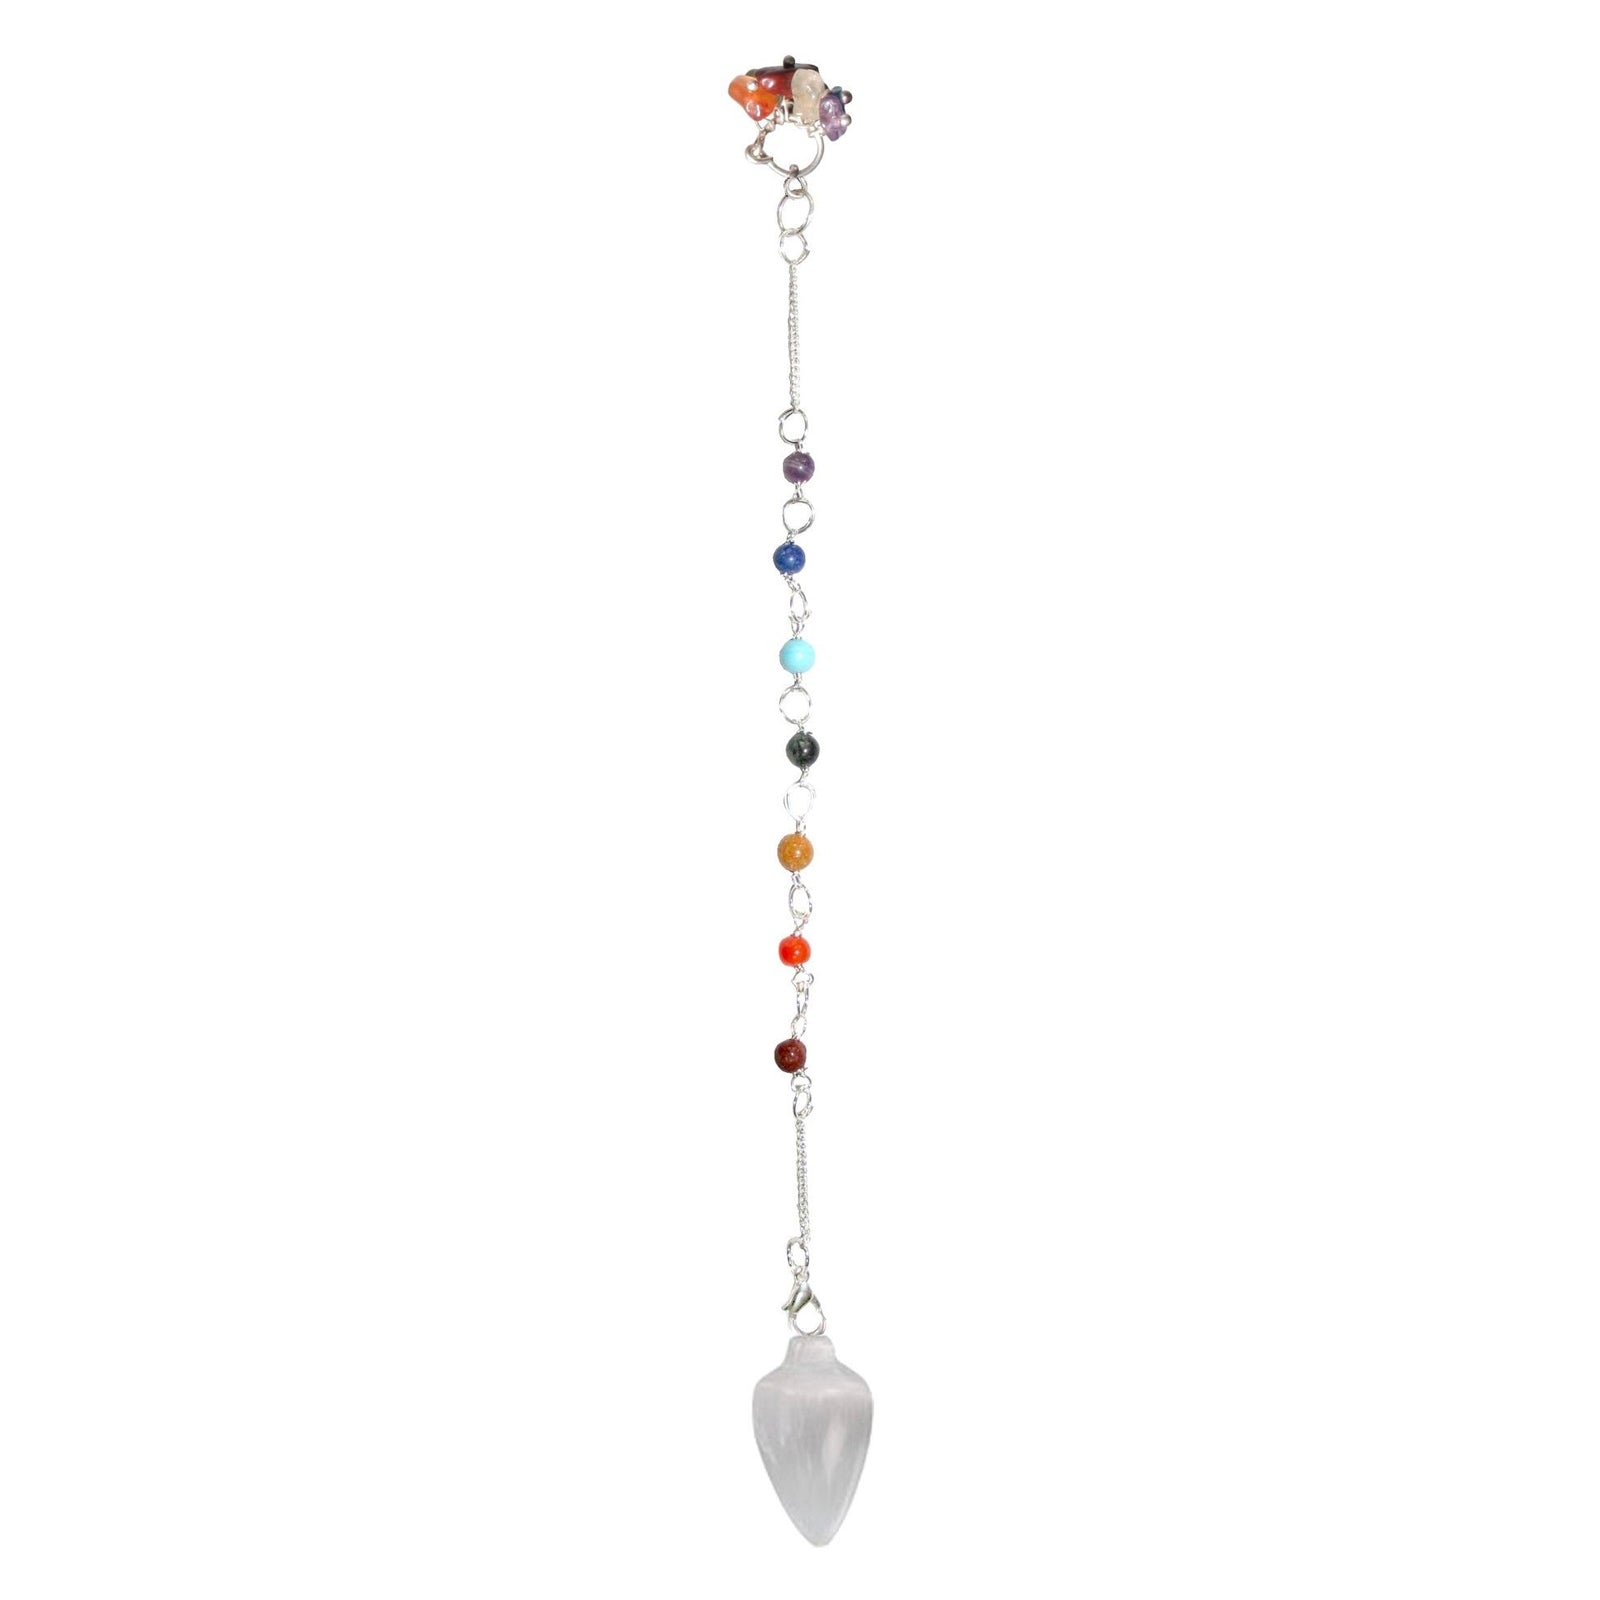 Pendulum selenite drop shaped + chakra chain